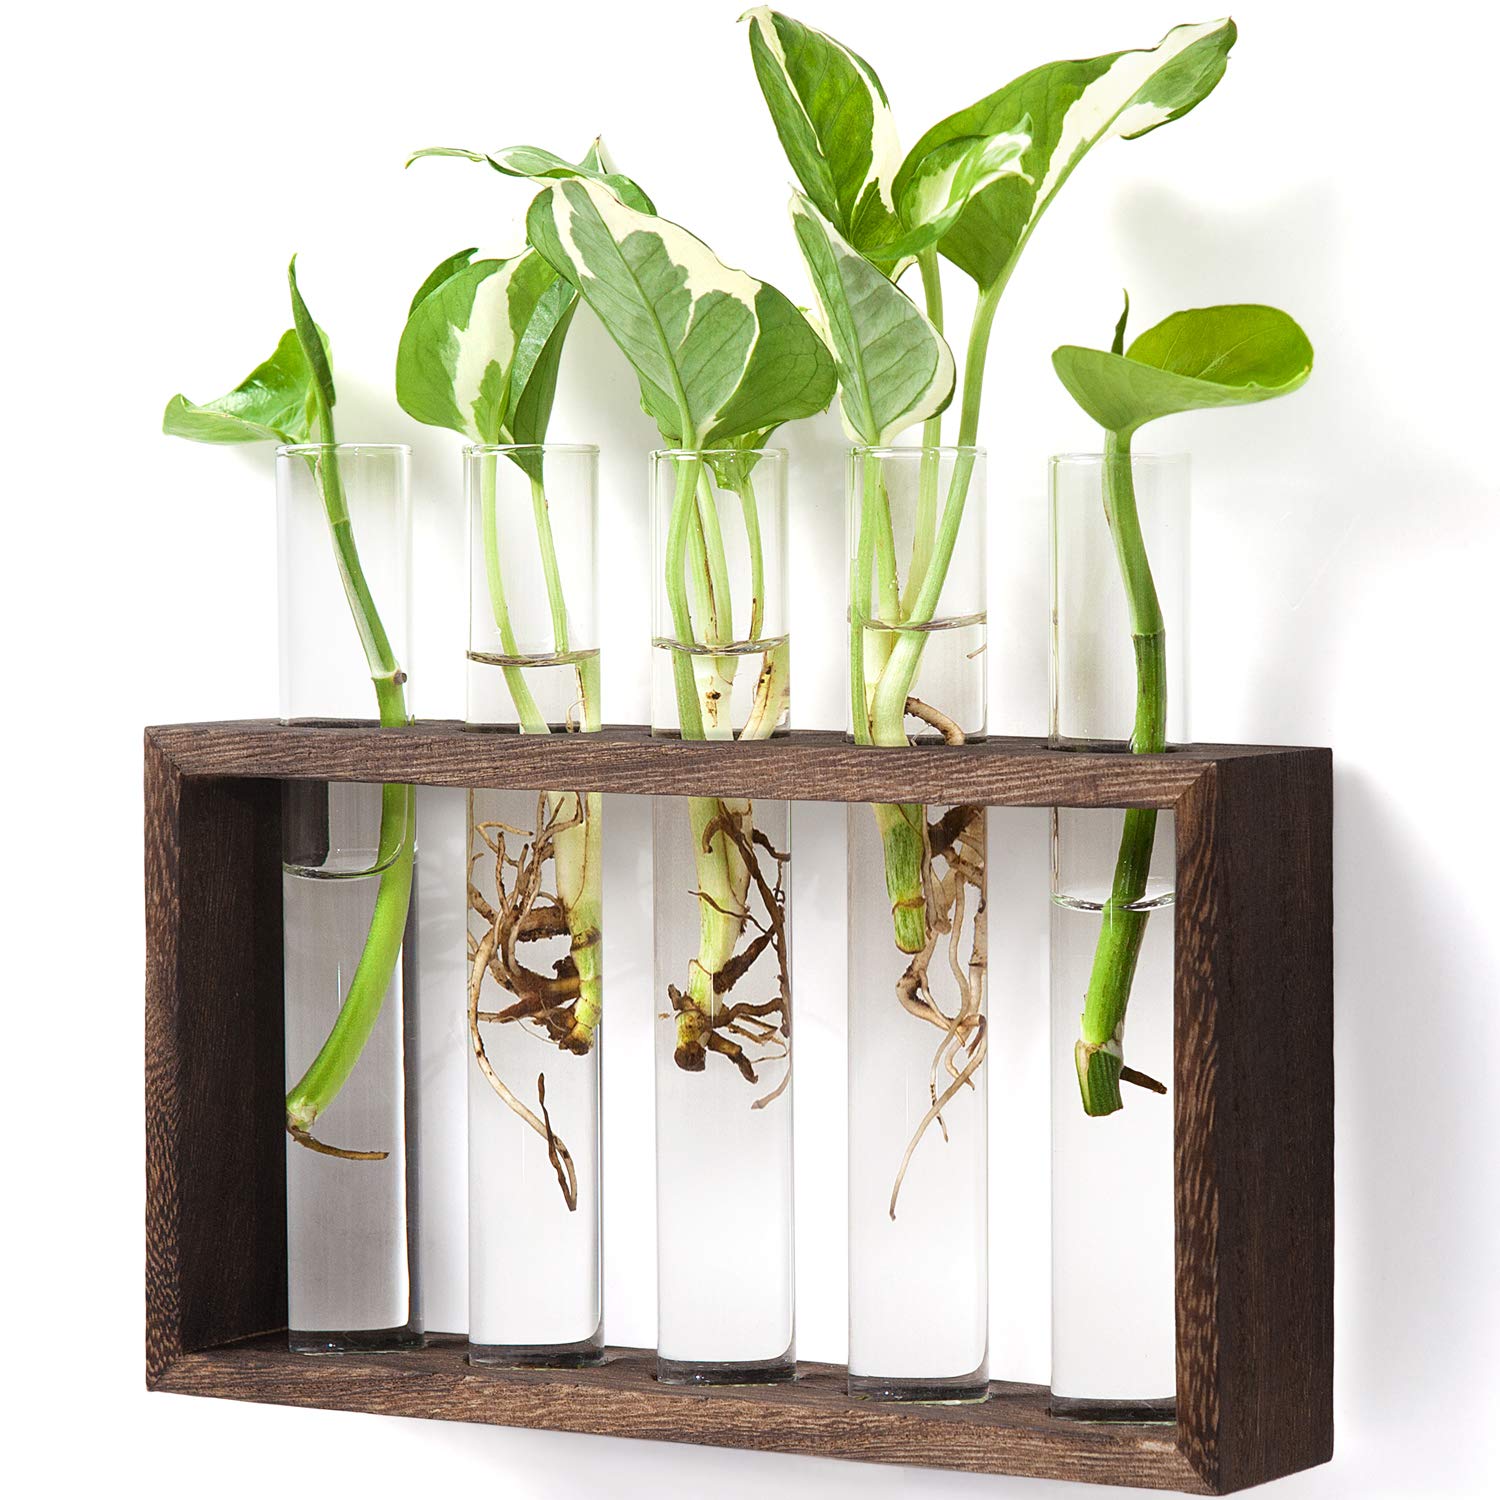 Plant Terrarium Transparent Desktop Glass Planter Test Tube Vase with Natural Log Wooden Stand for Hydroponics Plants Home Garden Wedding Decor 